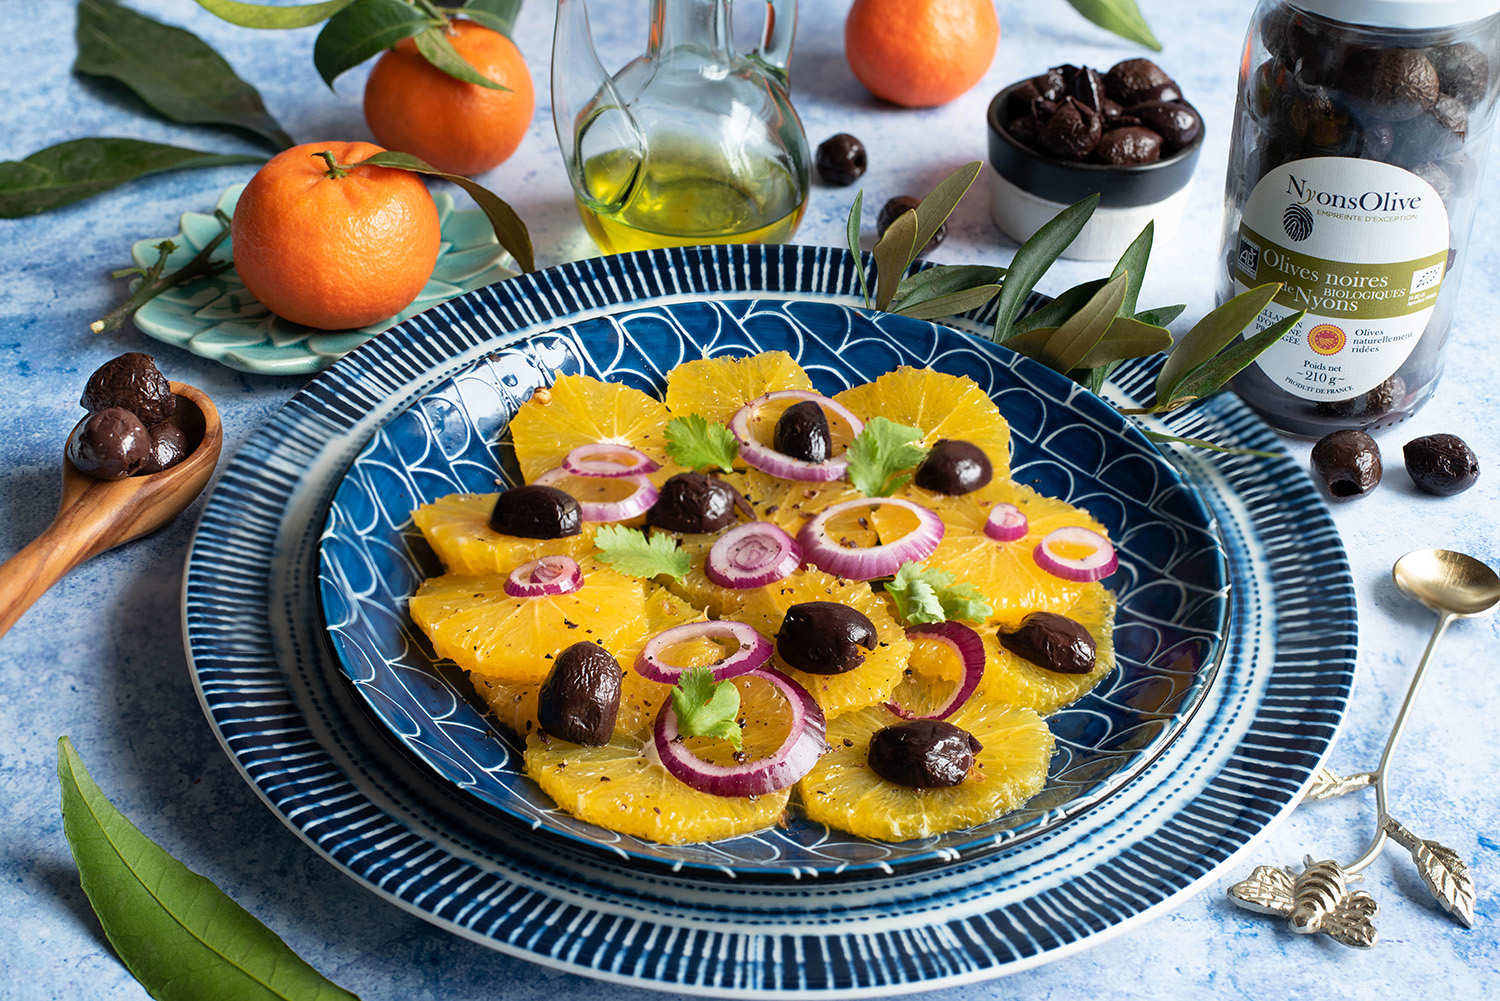 Salade d’oranges et olives de Nyons